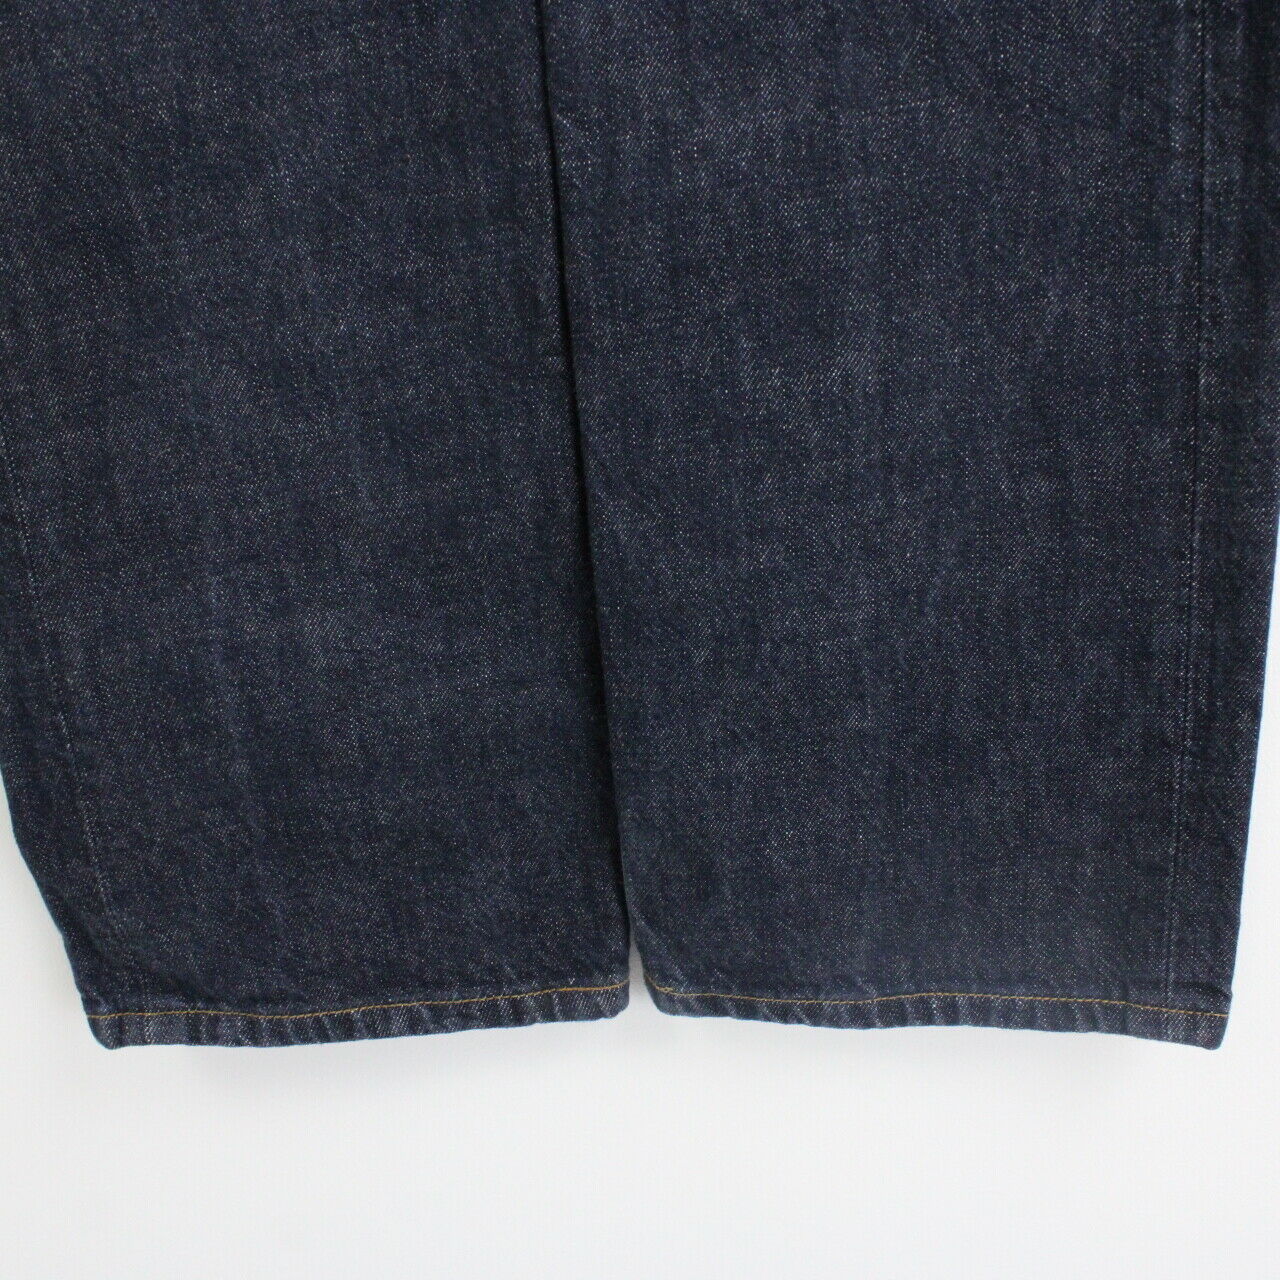 Womens LEVIS 501 Jeans Indigo | W26 L34